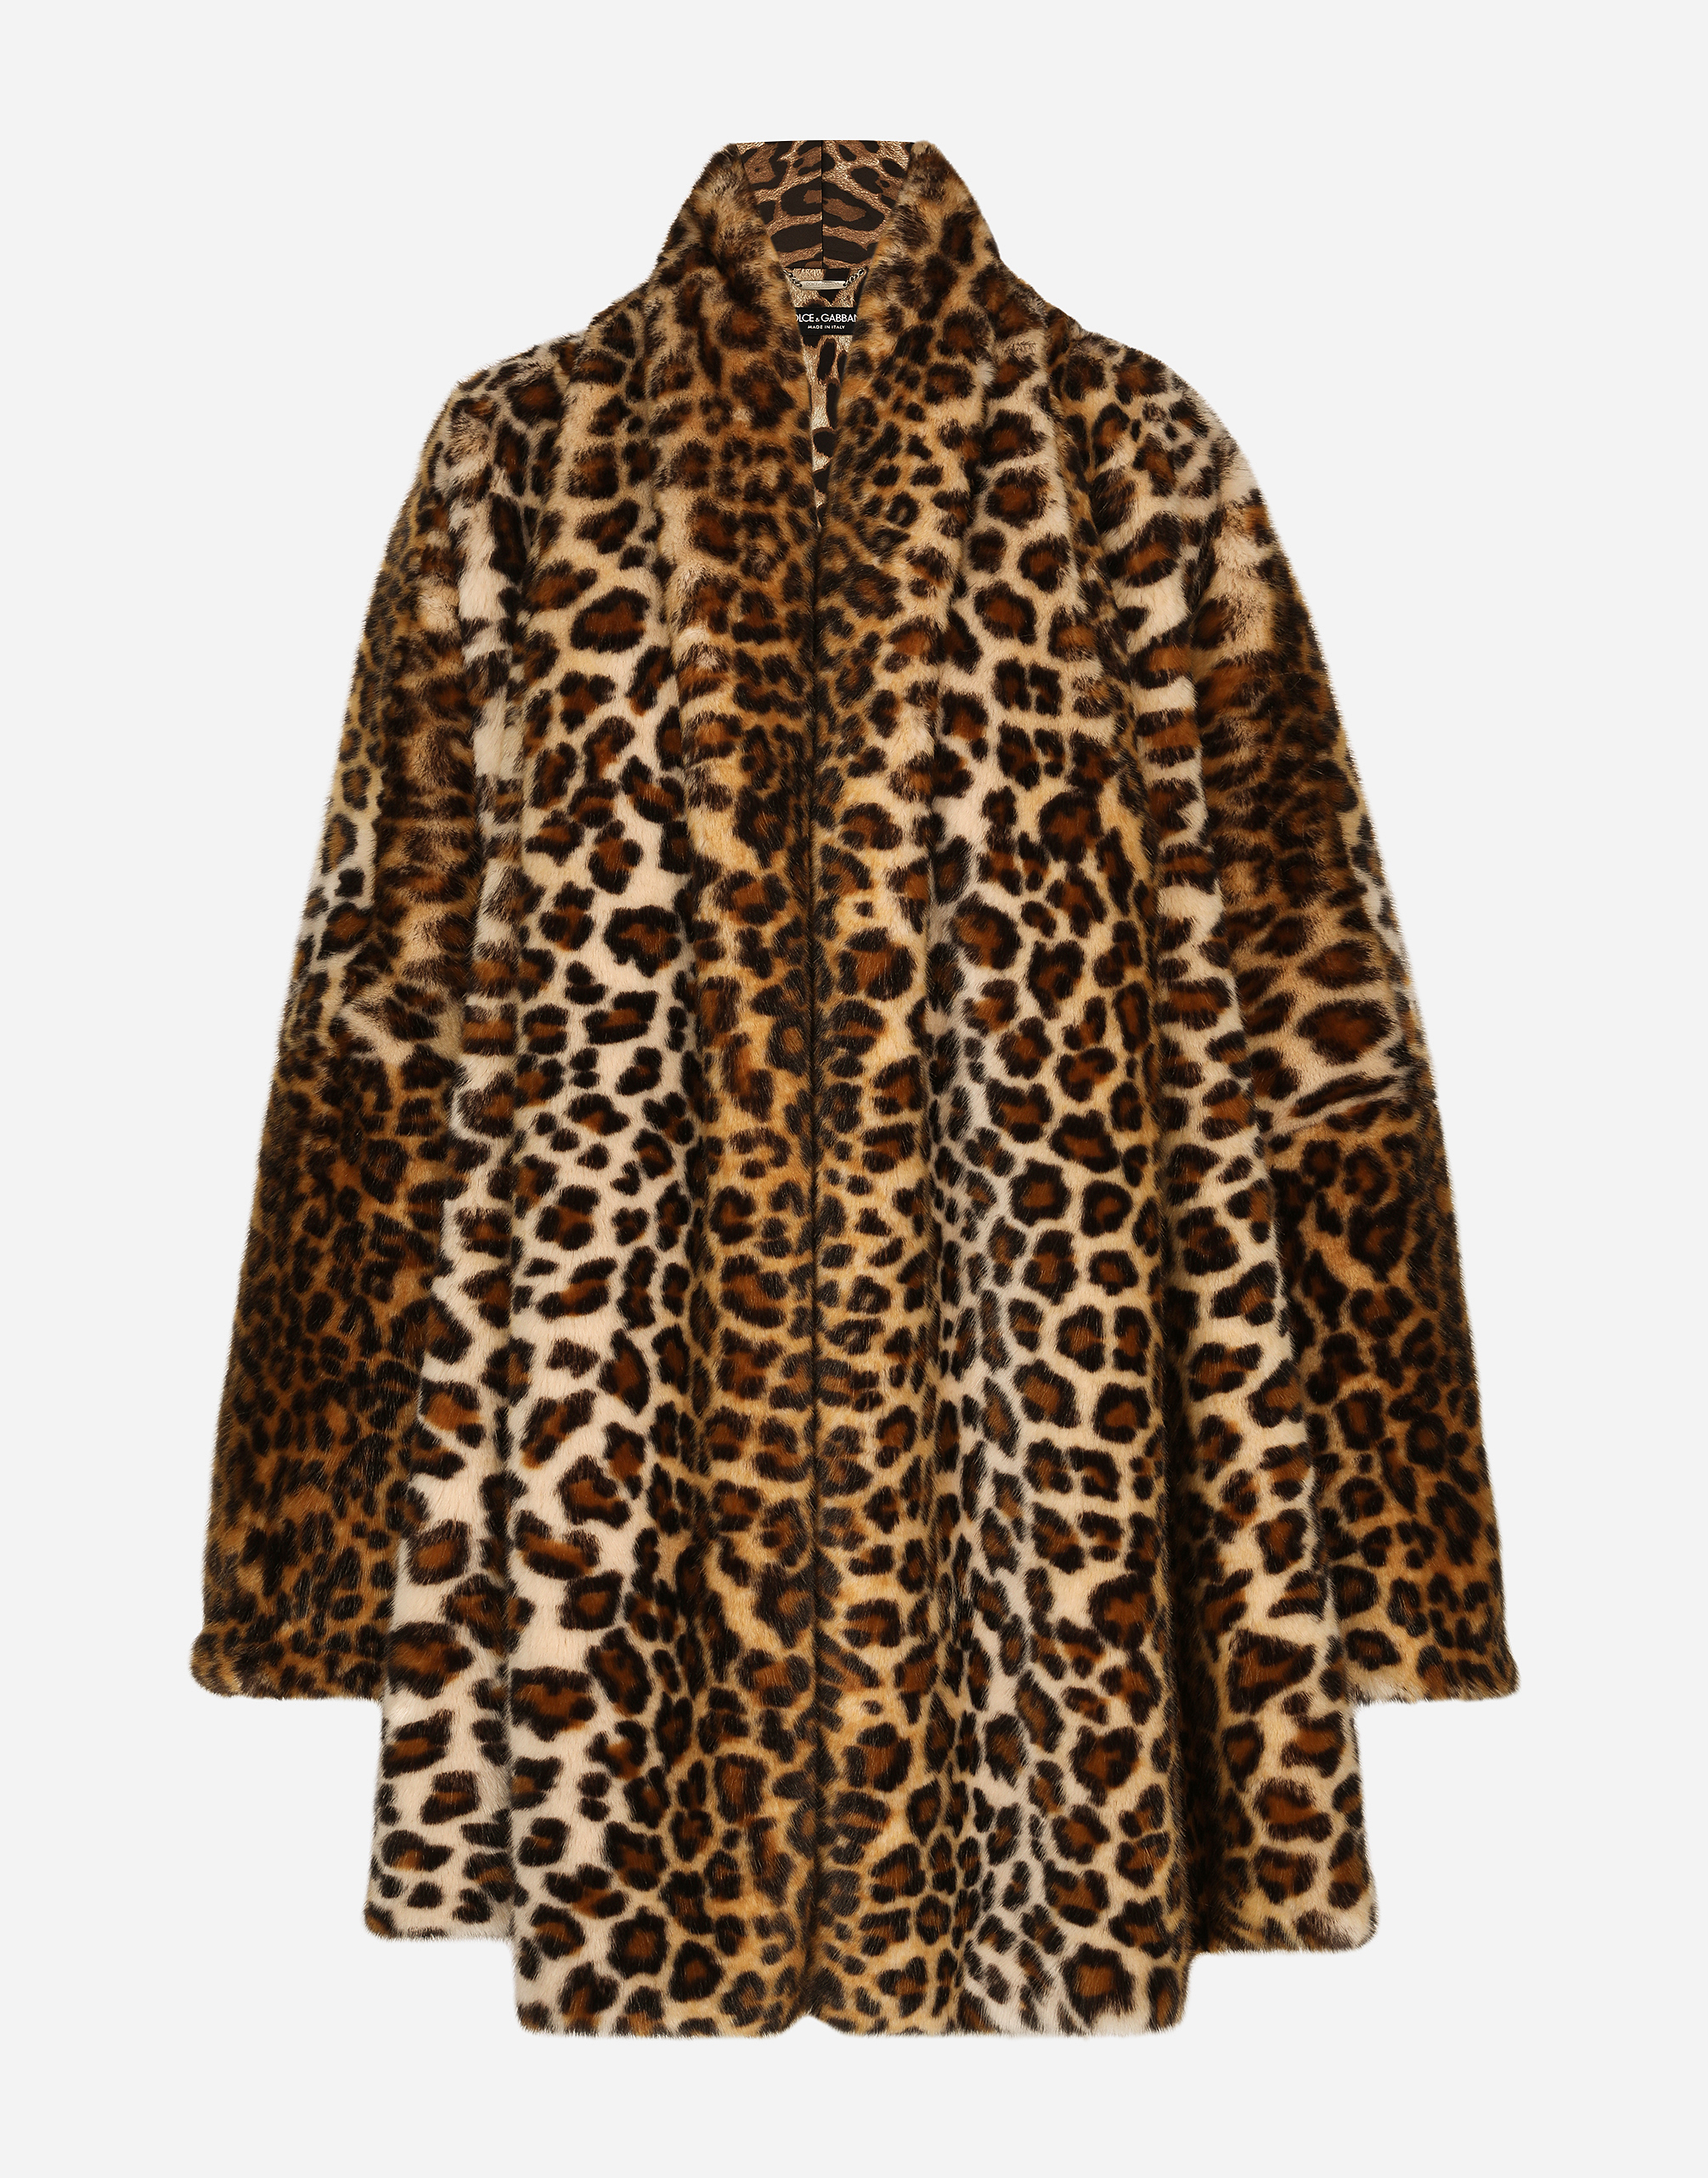 KIM DOLCE&GABBANA Faux fur cape with leopard print in Animal Print